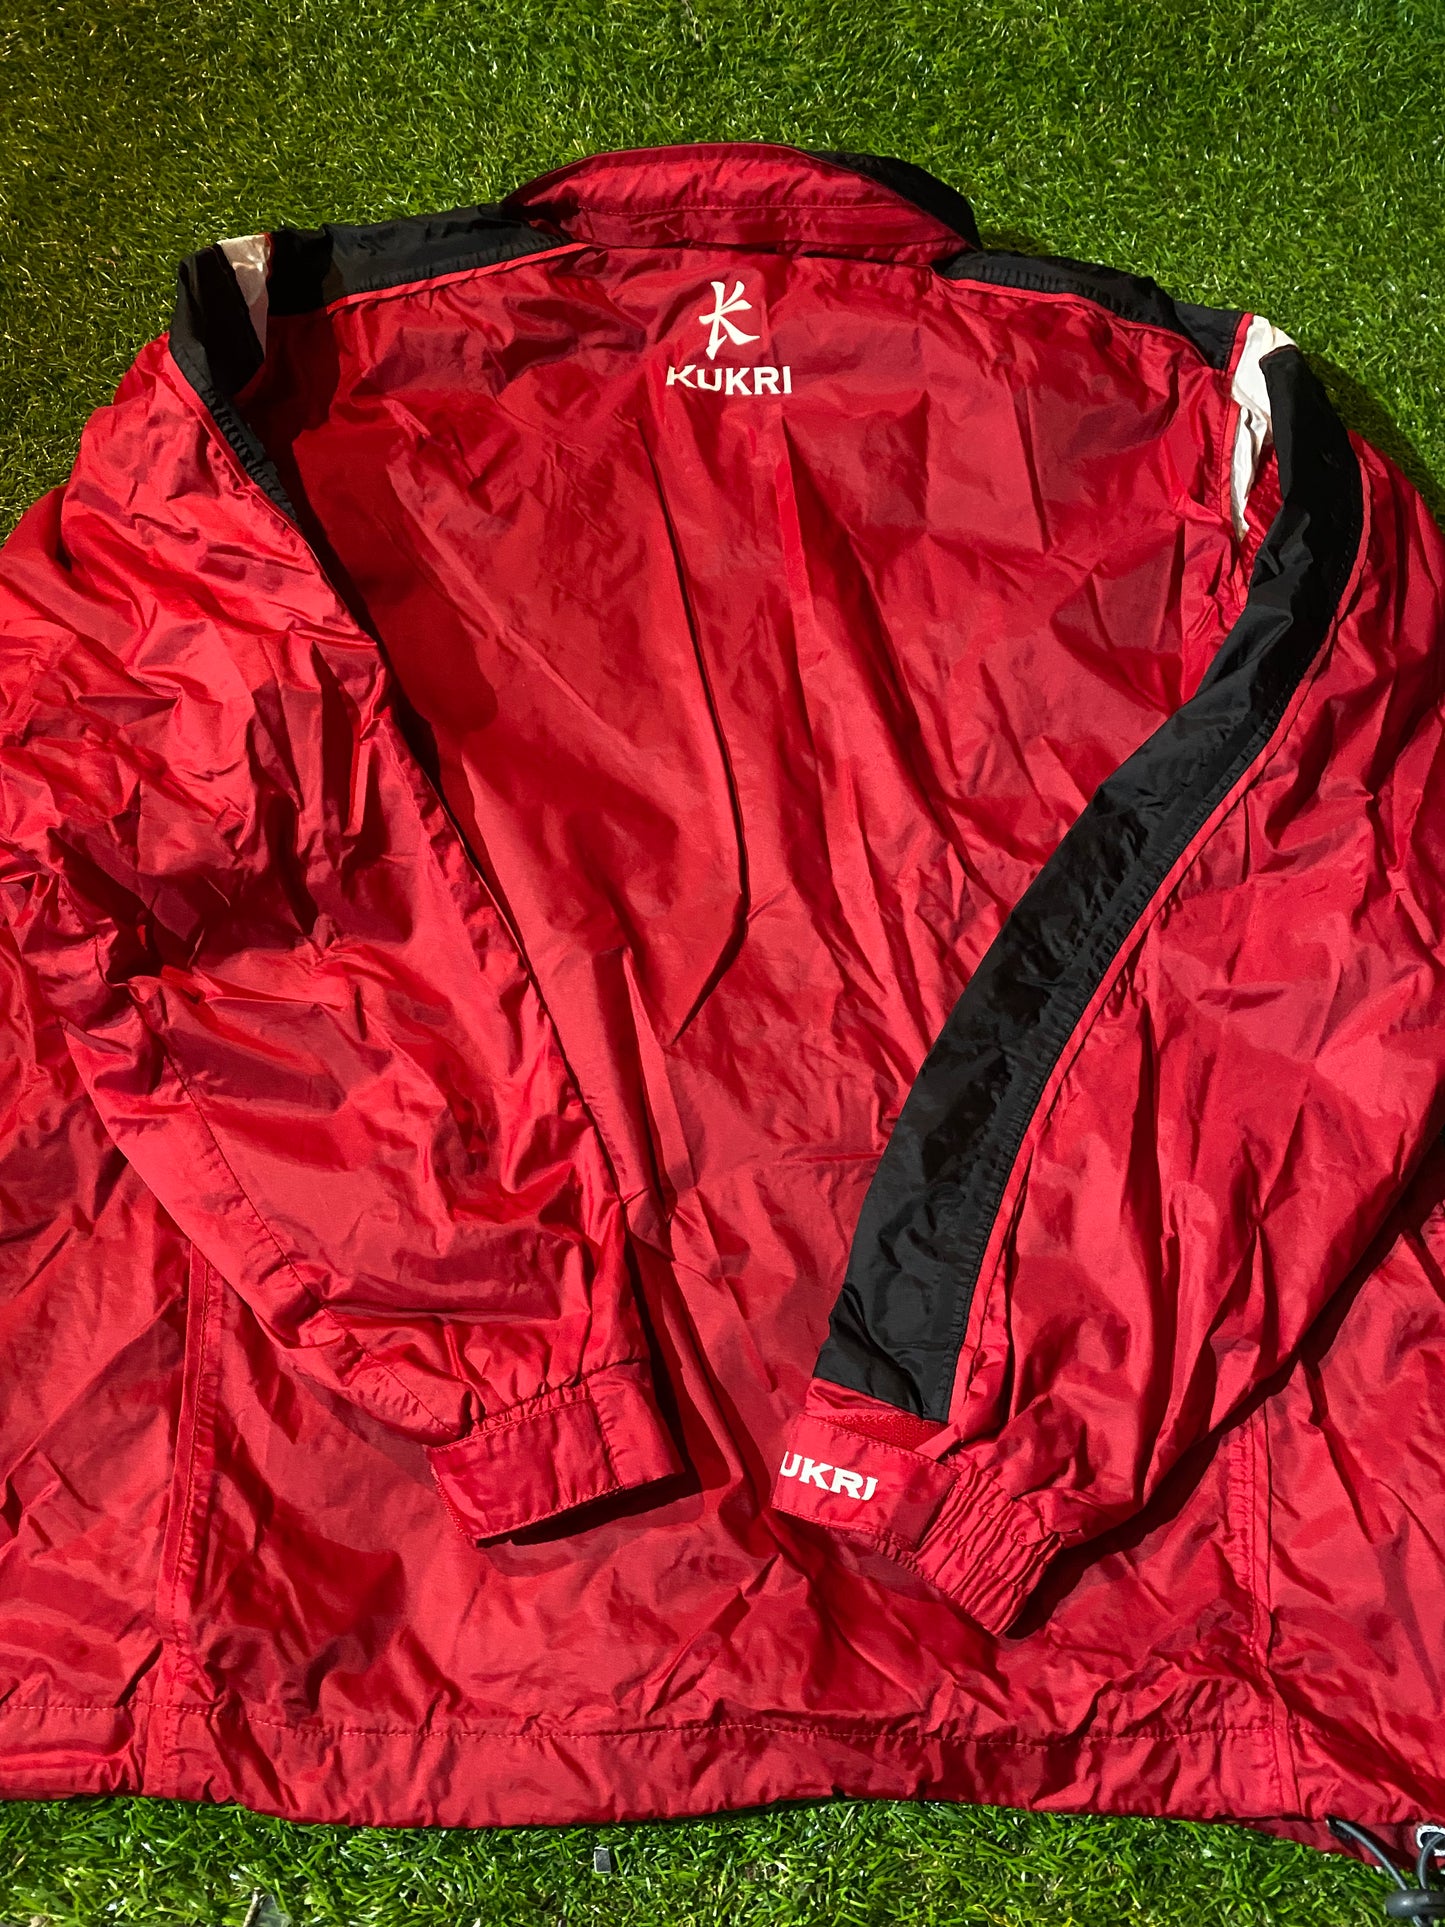 Ulster Northern Ireland Rugby Union Medium Mans Lighter Weatherproof Hooded Jacket